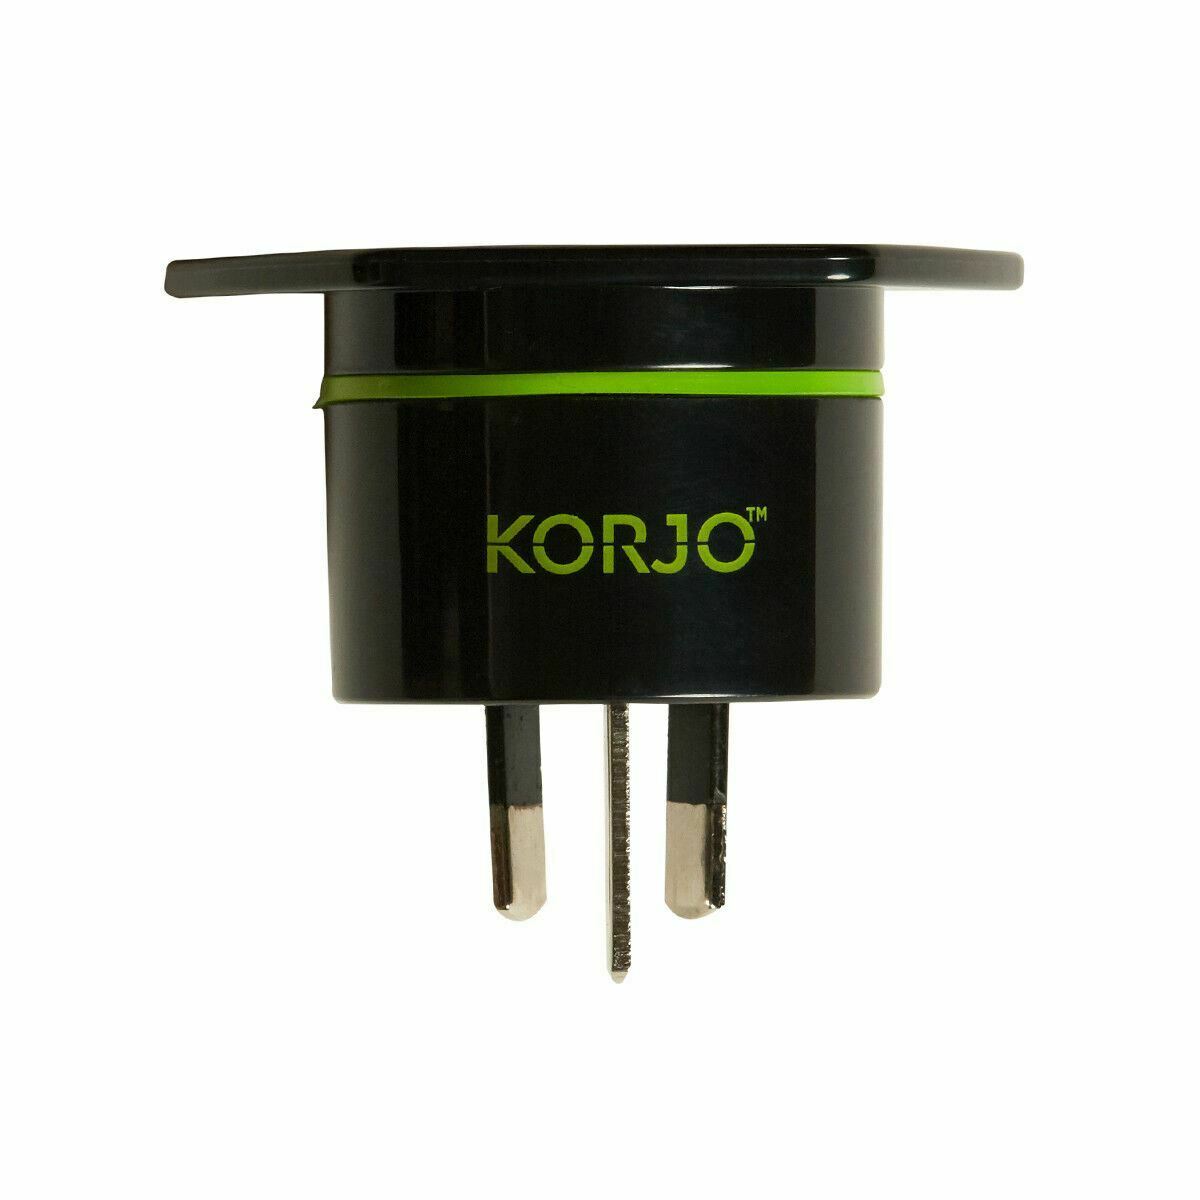 KORJO Reverse Plug Adaptor from USA, UK to Use In AUS, NZ